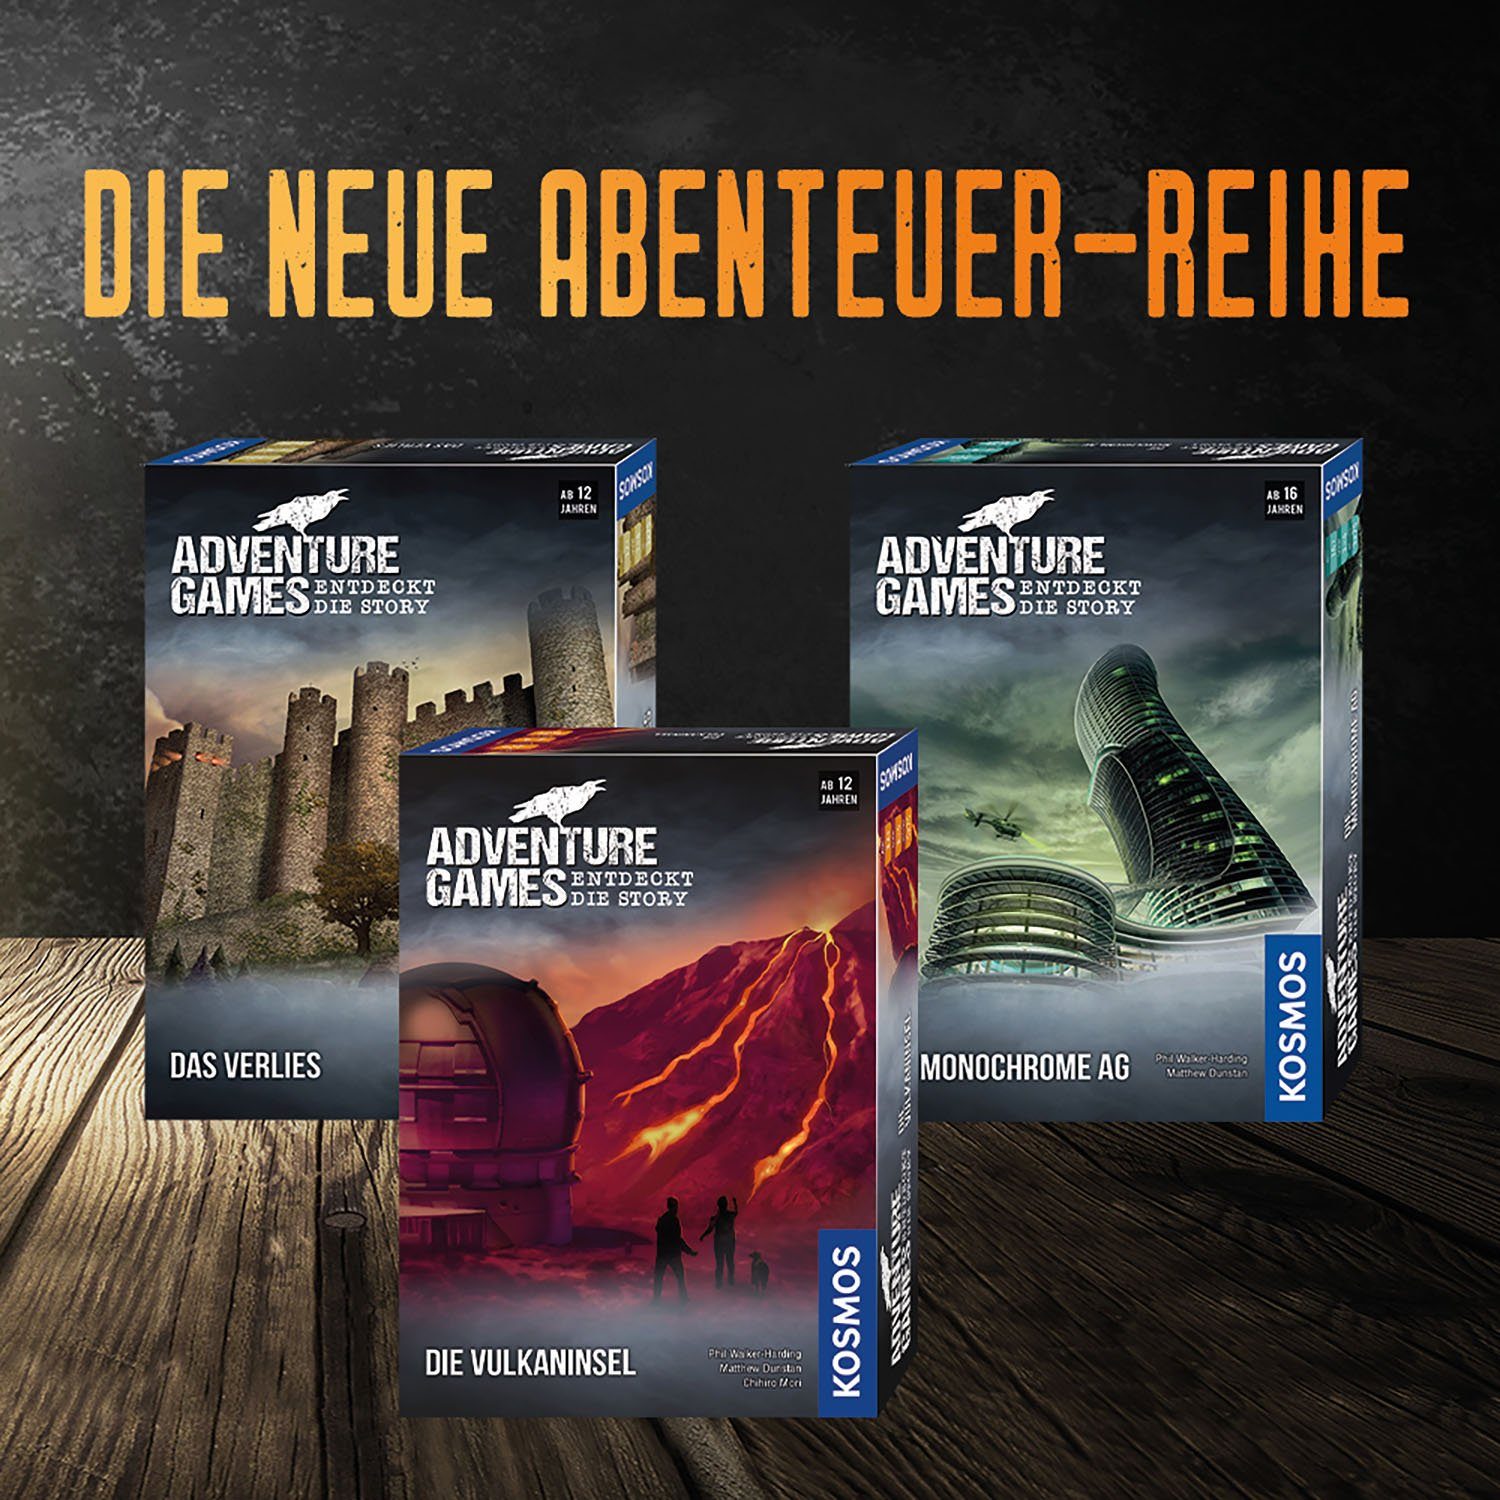 Spiel, Mystery-Spiel Made Games Kosmos Vulkaninsel, - Verlag Die Adventure KOSMOS in Germany